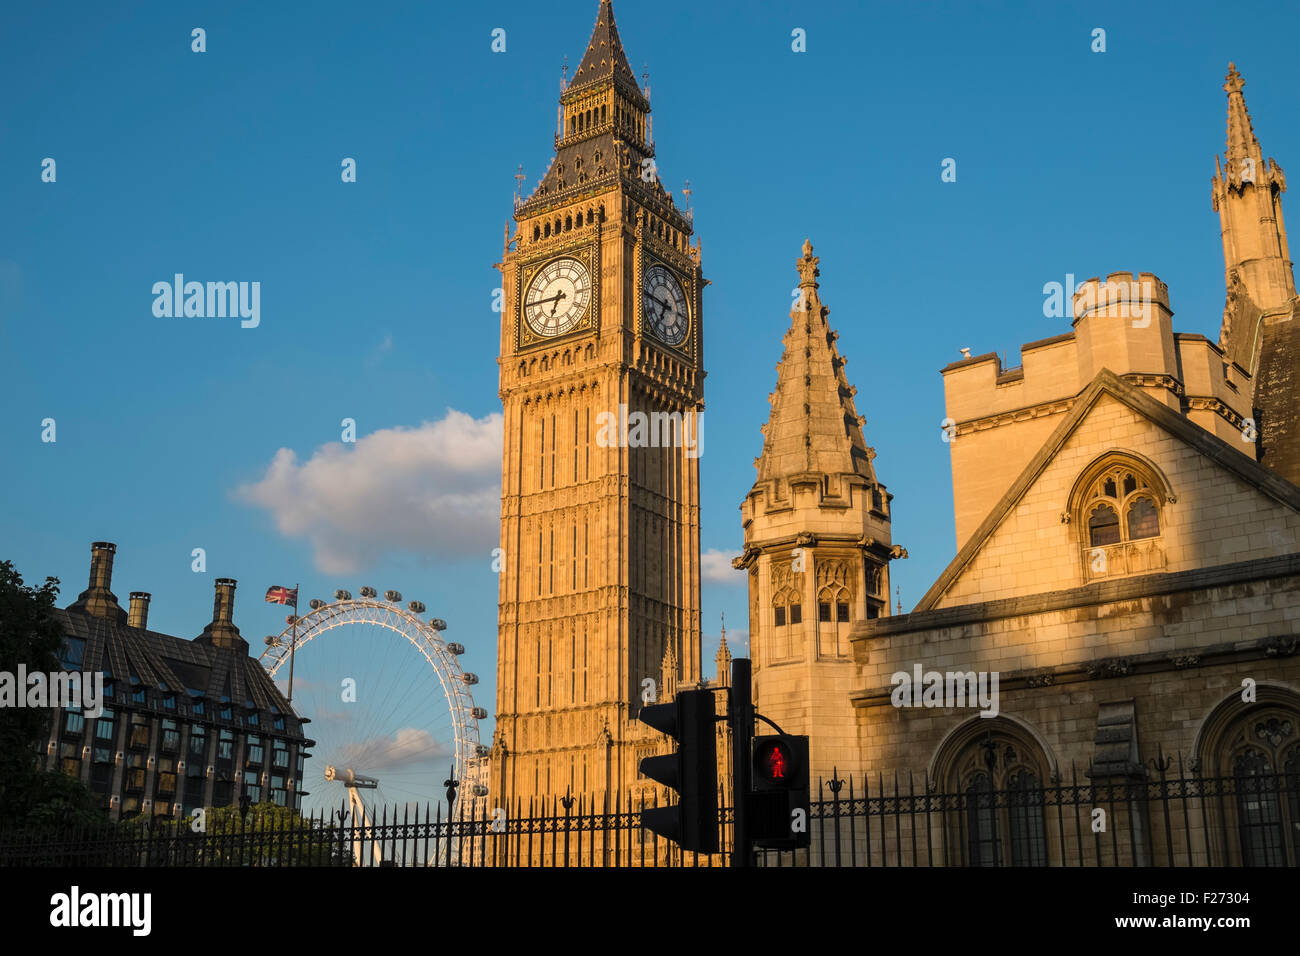 Iconic landmark Big Ben glows in late afternoon sunshine, London, England, UK Stock Photo